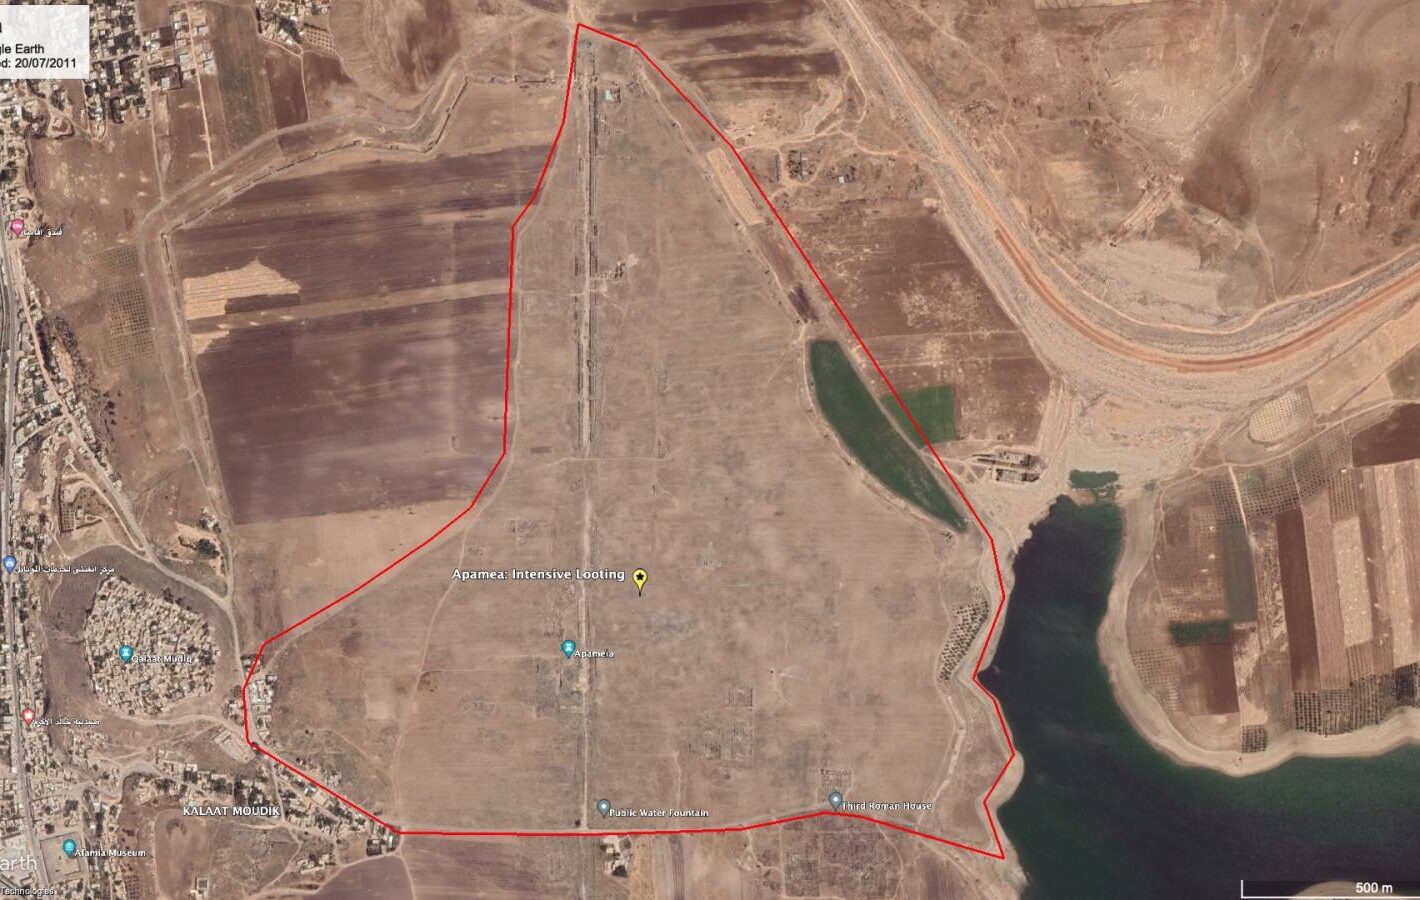 Satellite image of Apamea in Syria